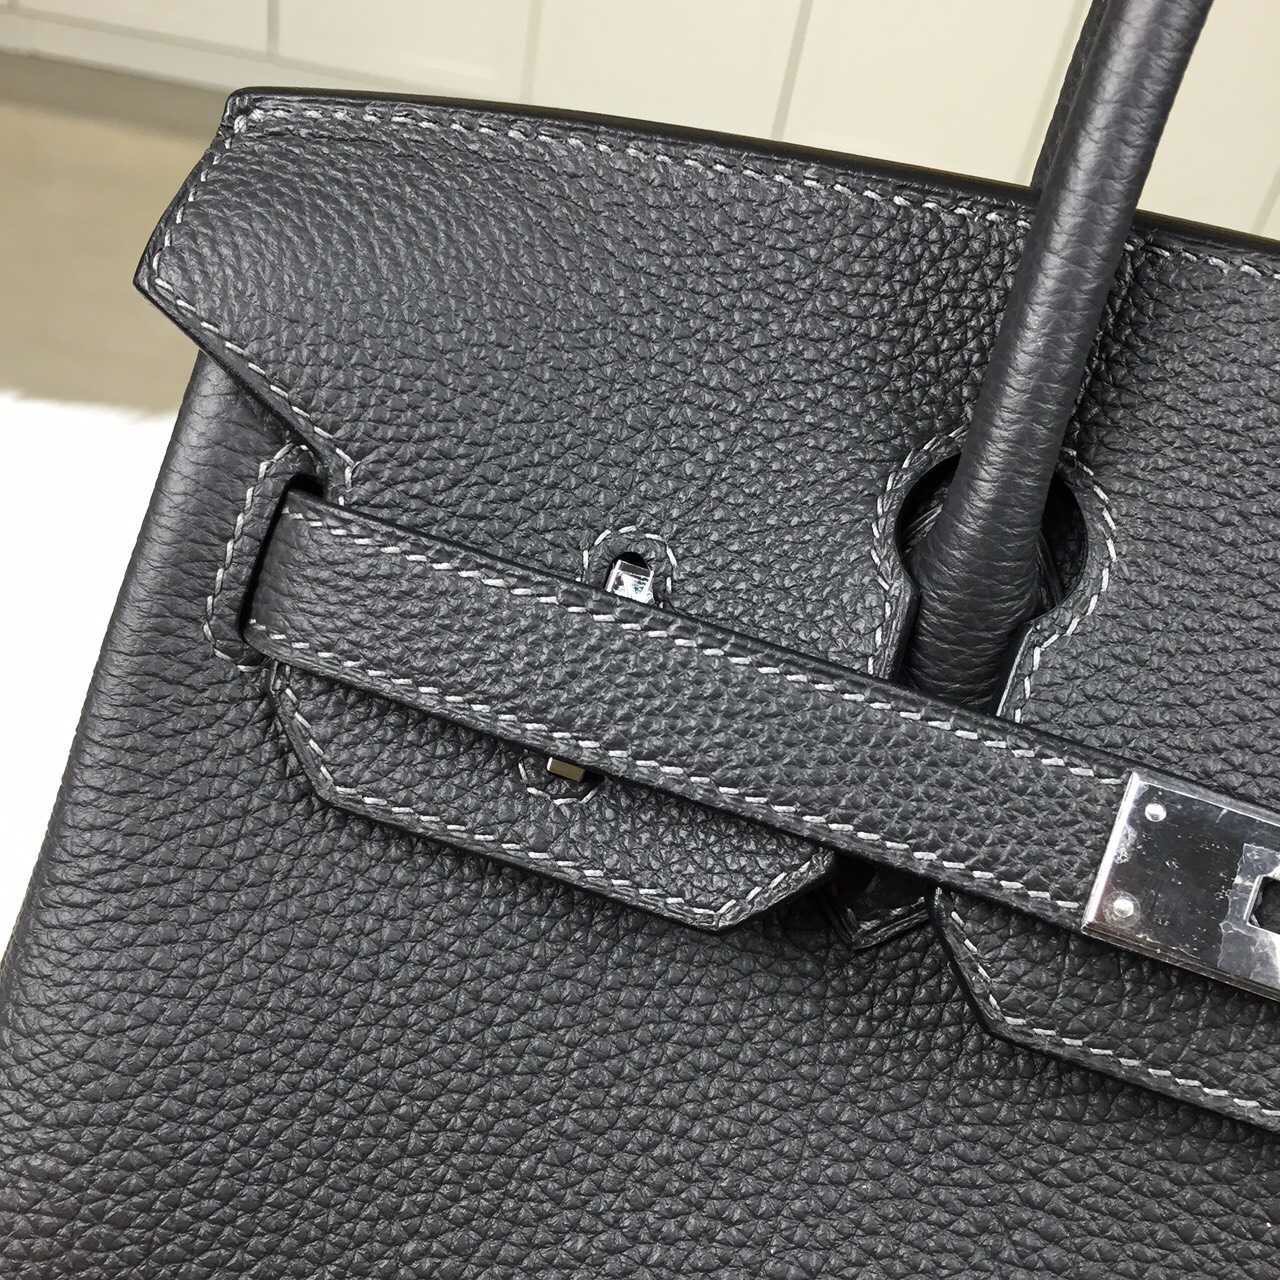 New Hermes Bag CK84 Graphite Grey Togo Calfskin Leather Birkin30cm